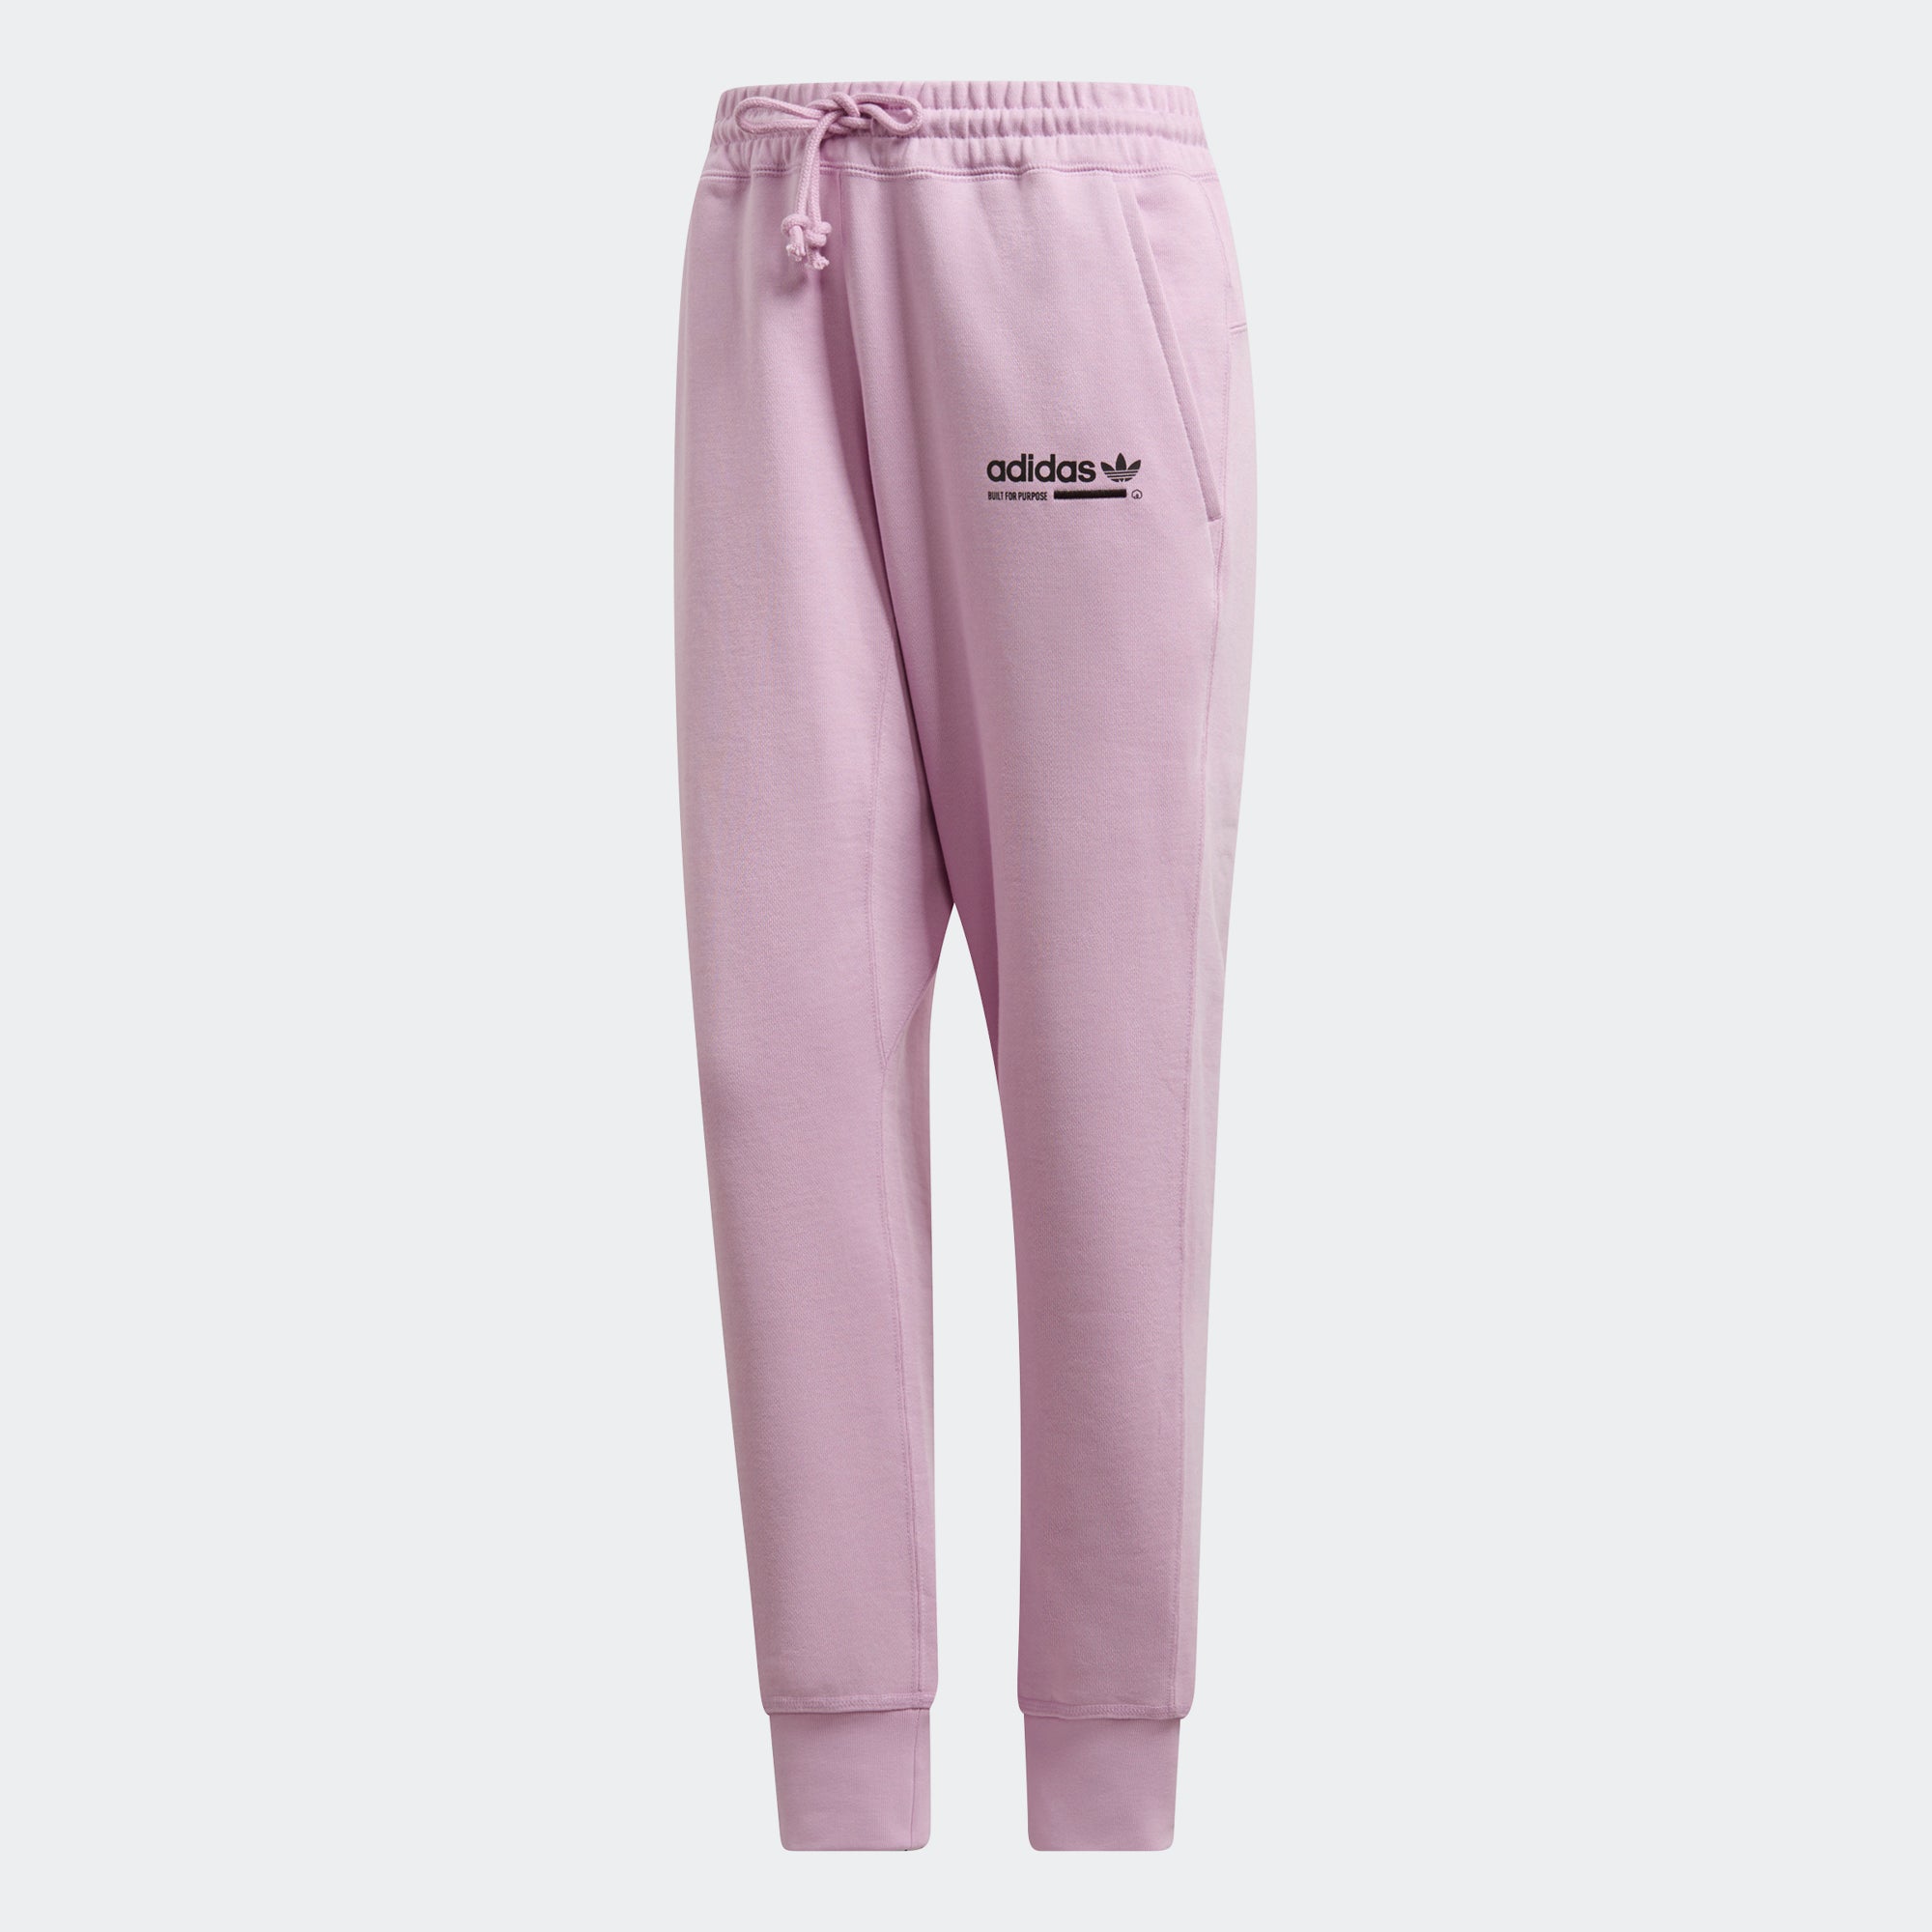 adidas lilac track pants